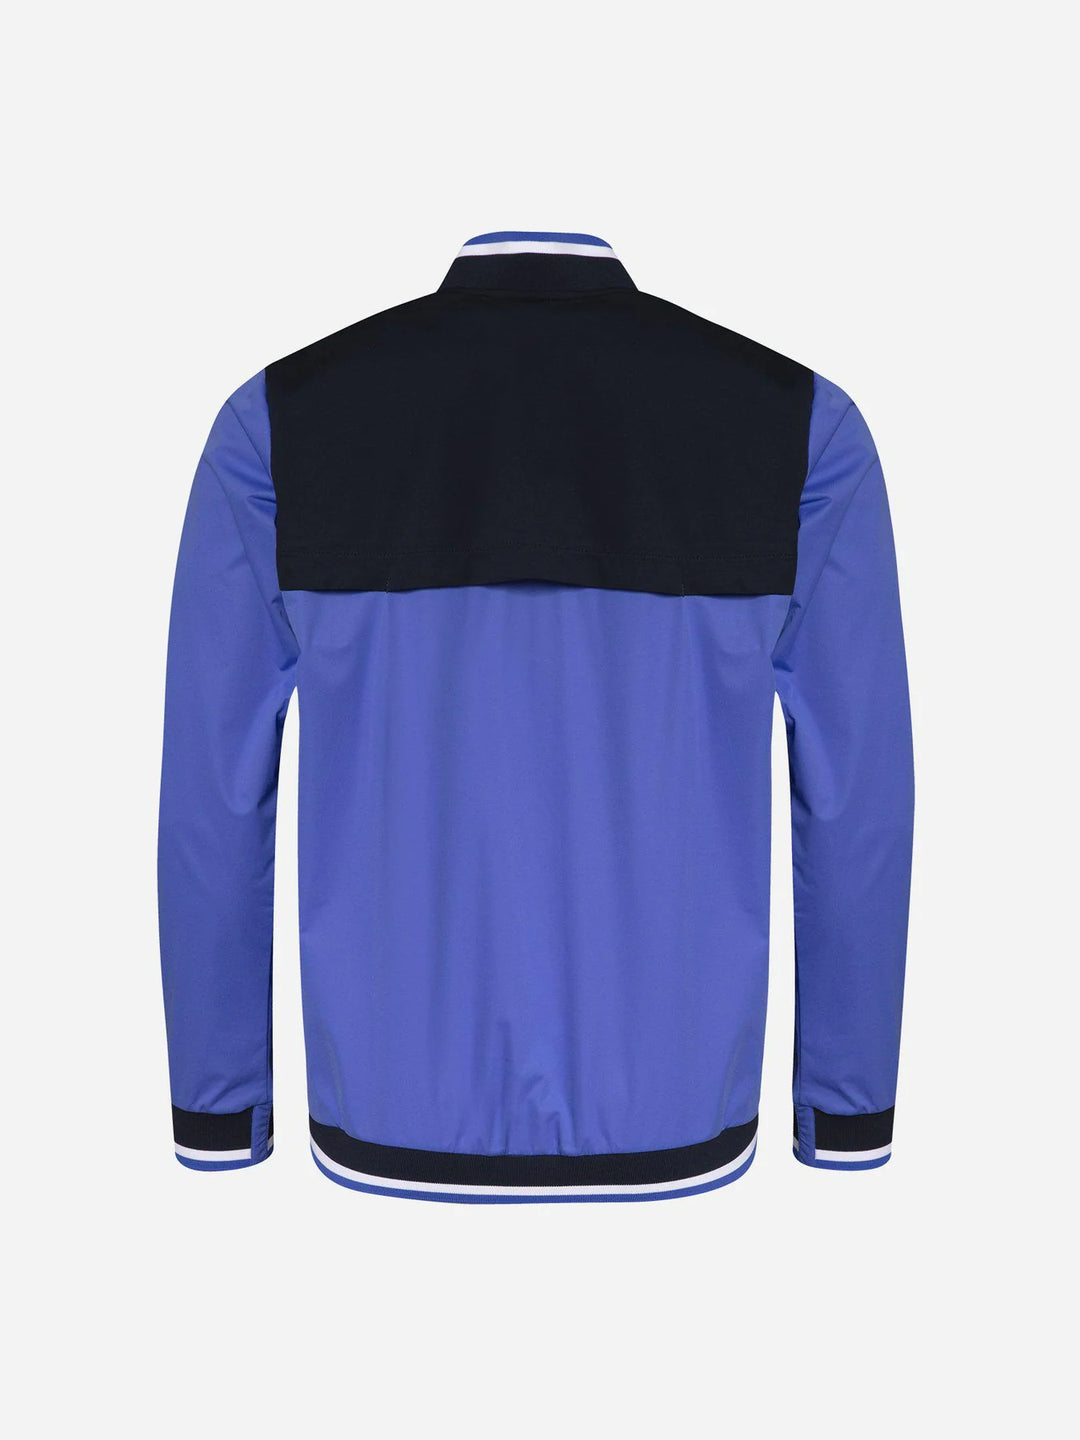 Cross Sportswear Mens Storm Jacket - AMPARO BLUE - Golf Anything Canada